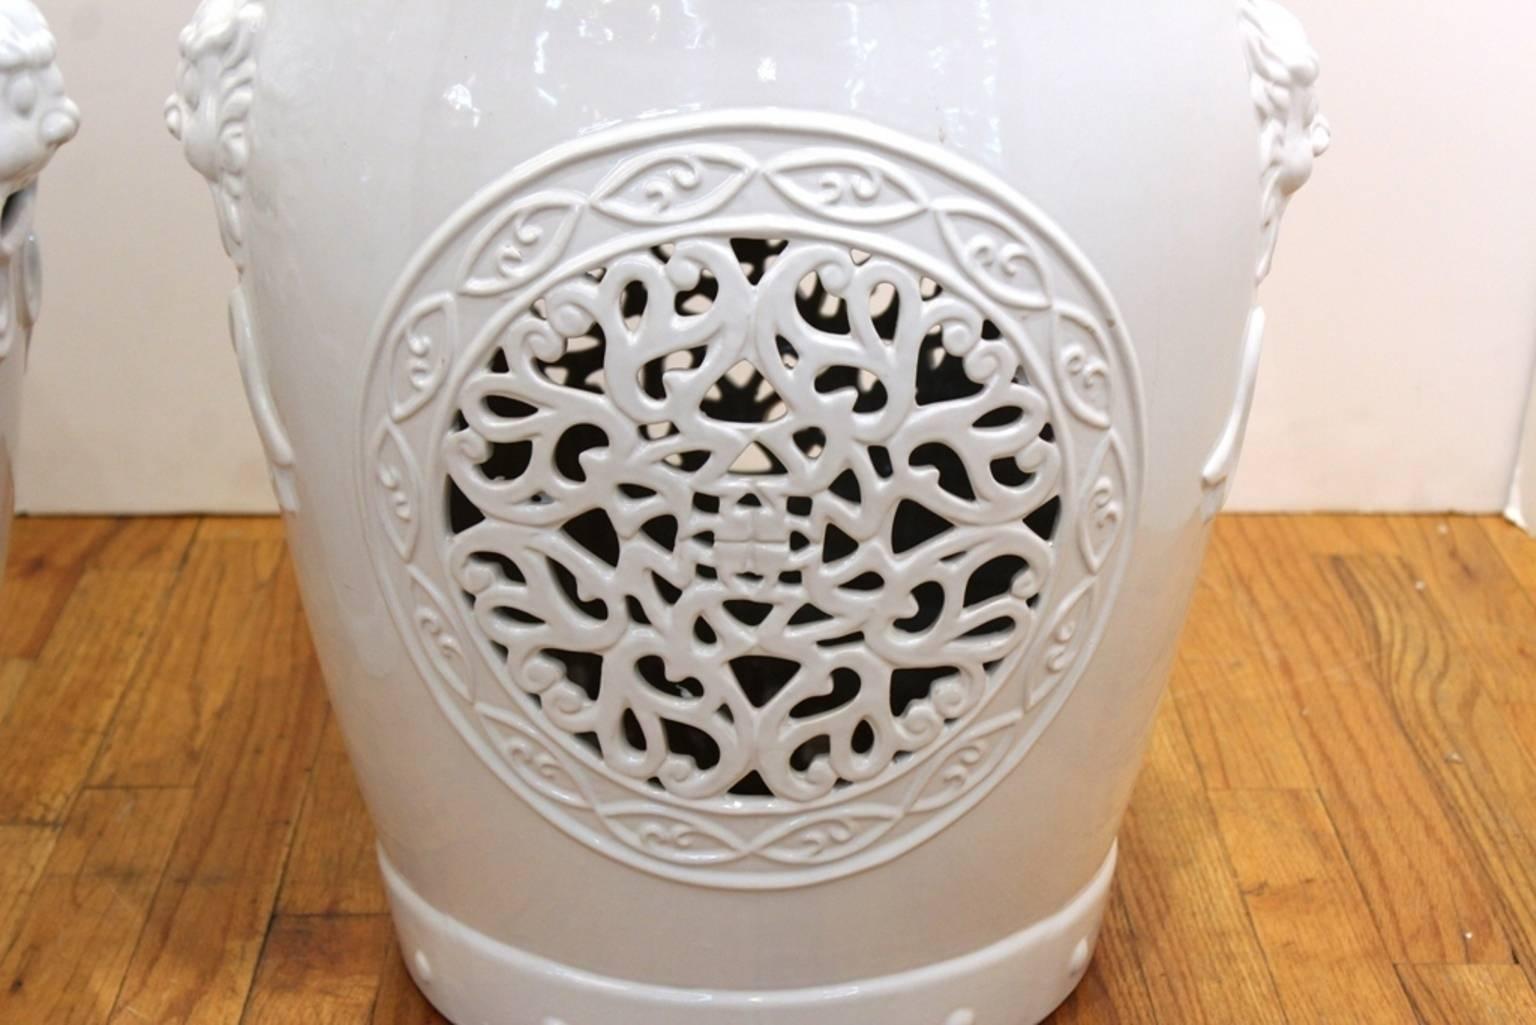 20th Century White Ceramic Garden Stool with Asian Inspired Motifs